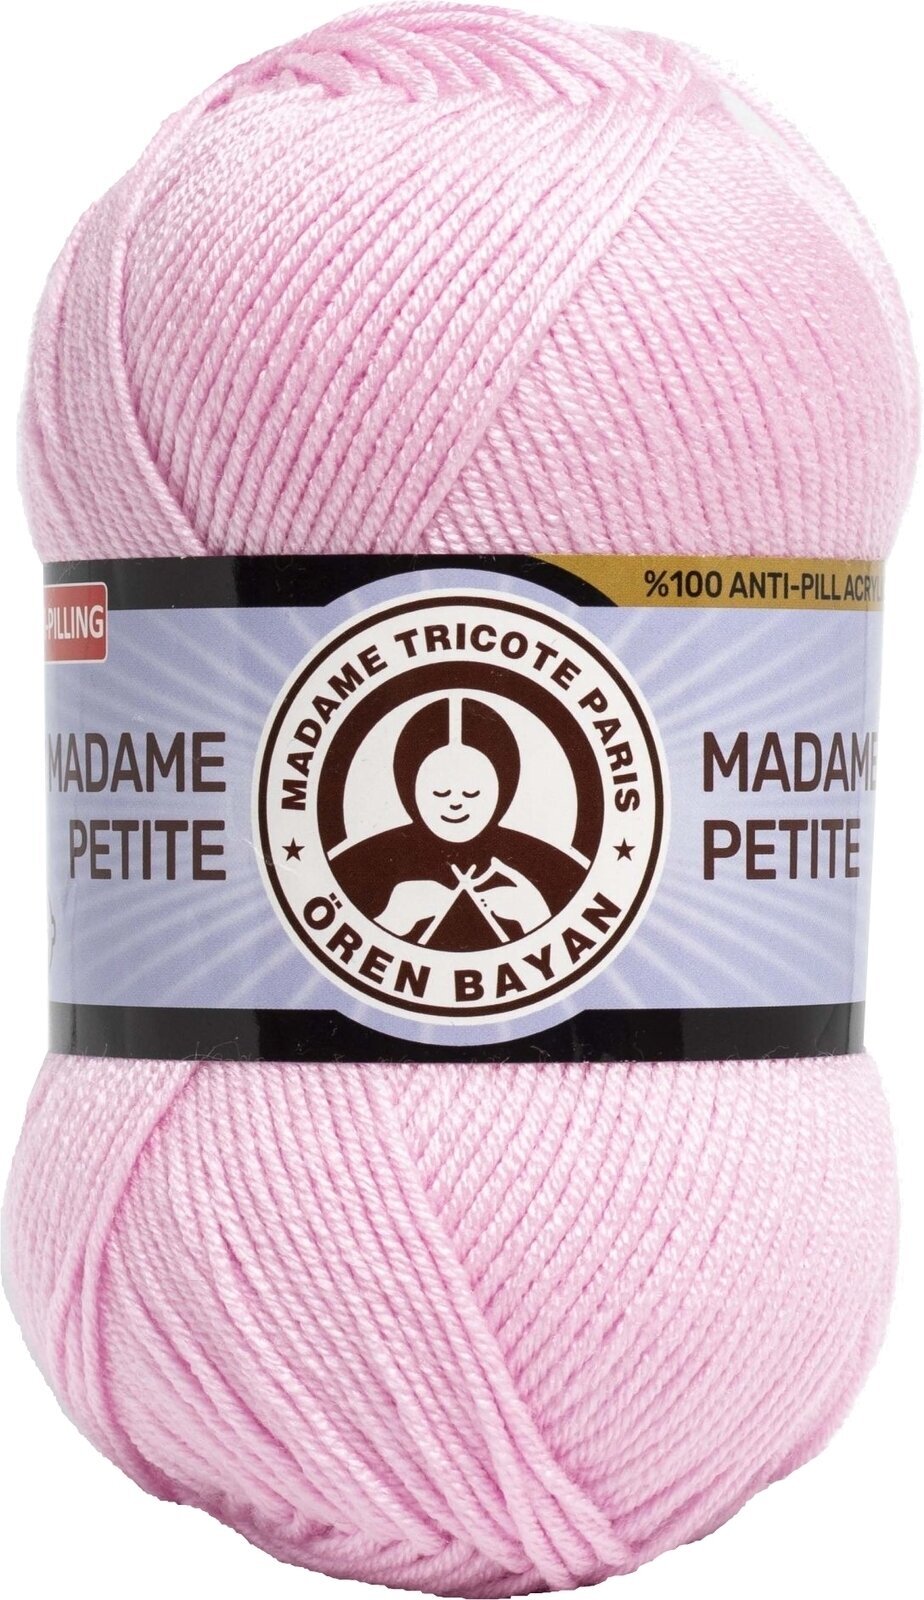 Knitting Yarn Madame Tricote Paris Madame Petite 3848 93 Knitting Yarn